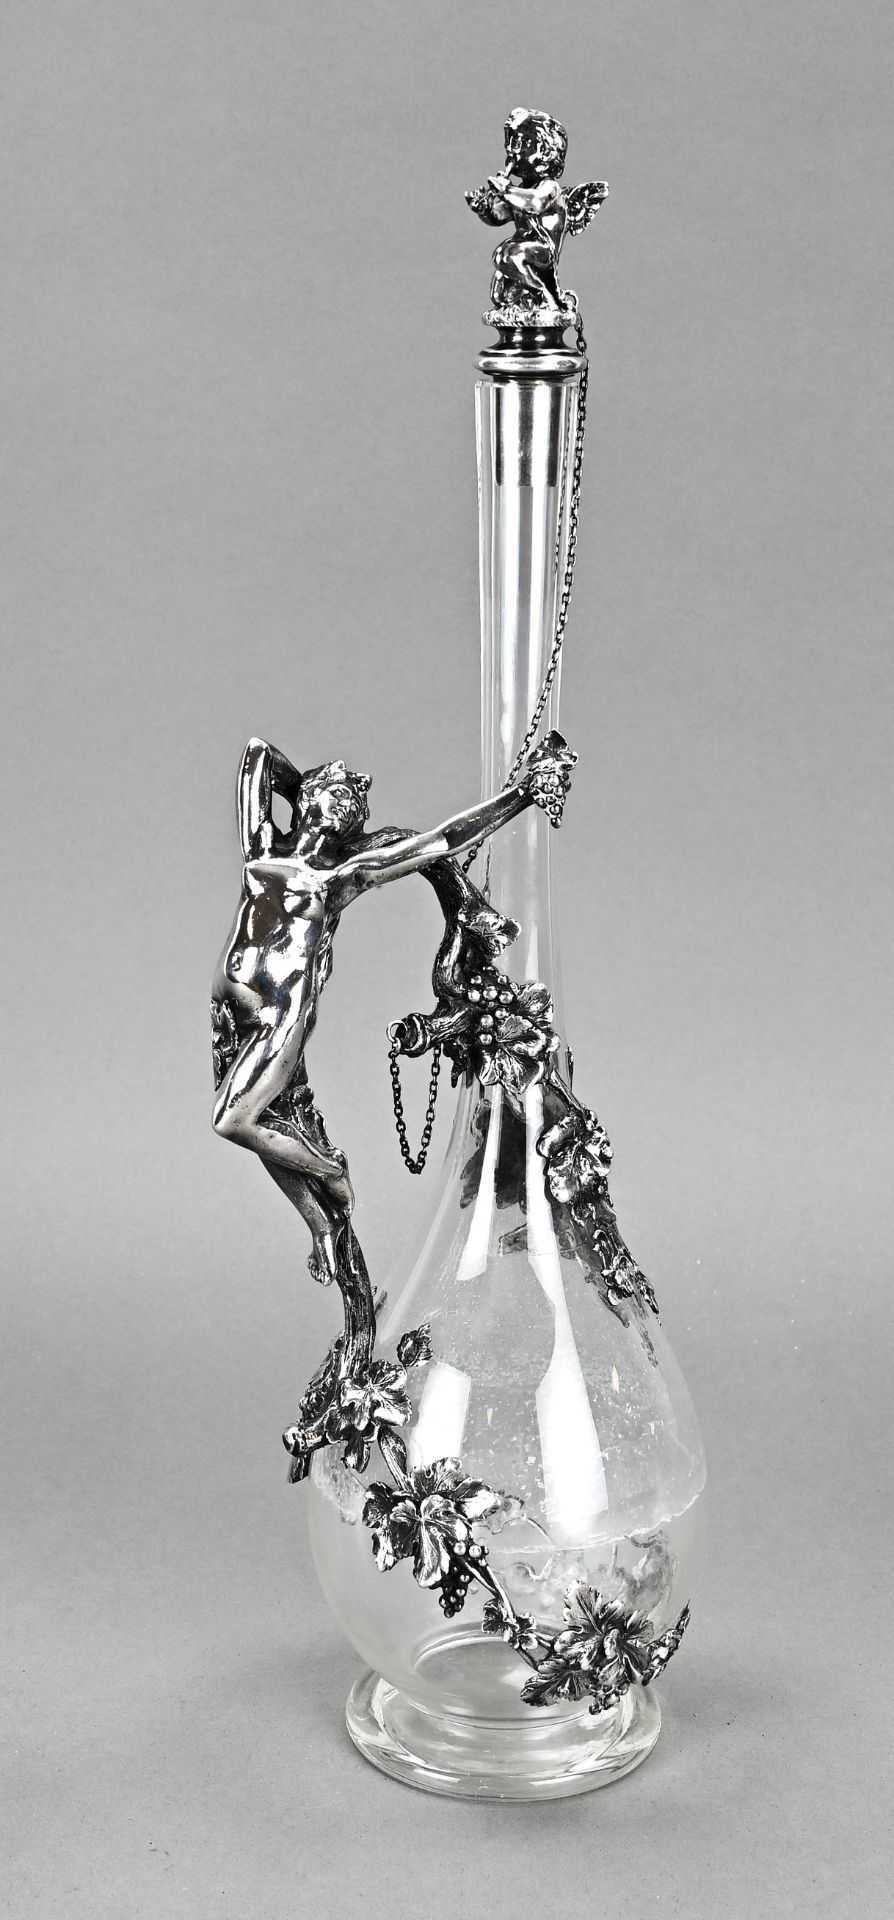 Rare decanter with silverware